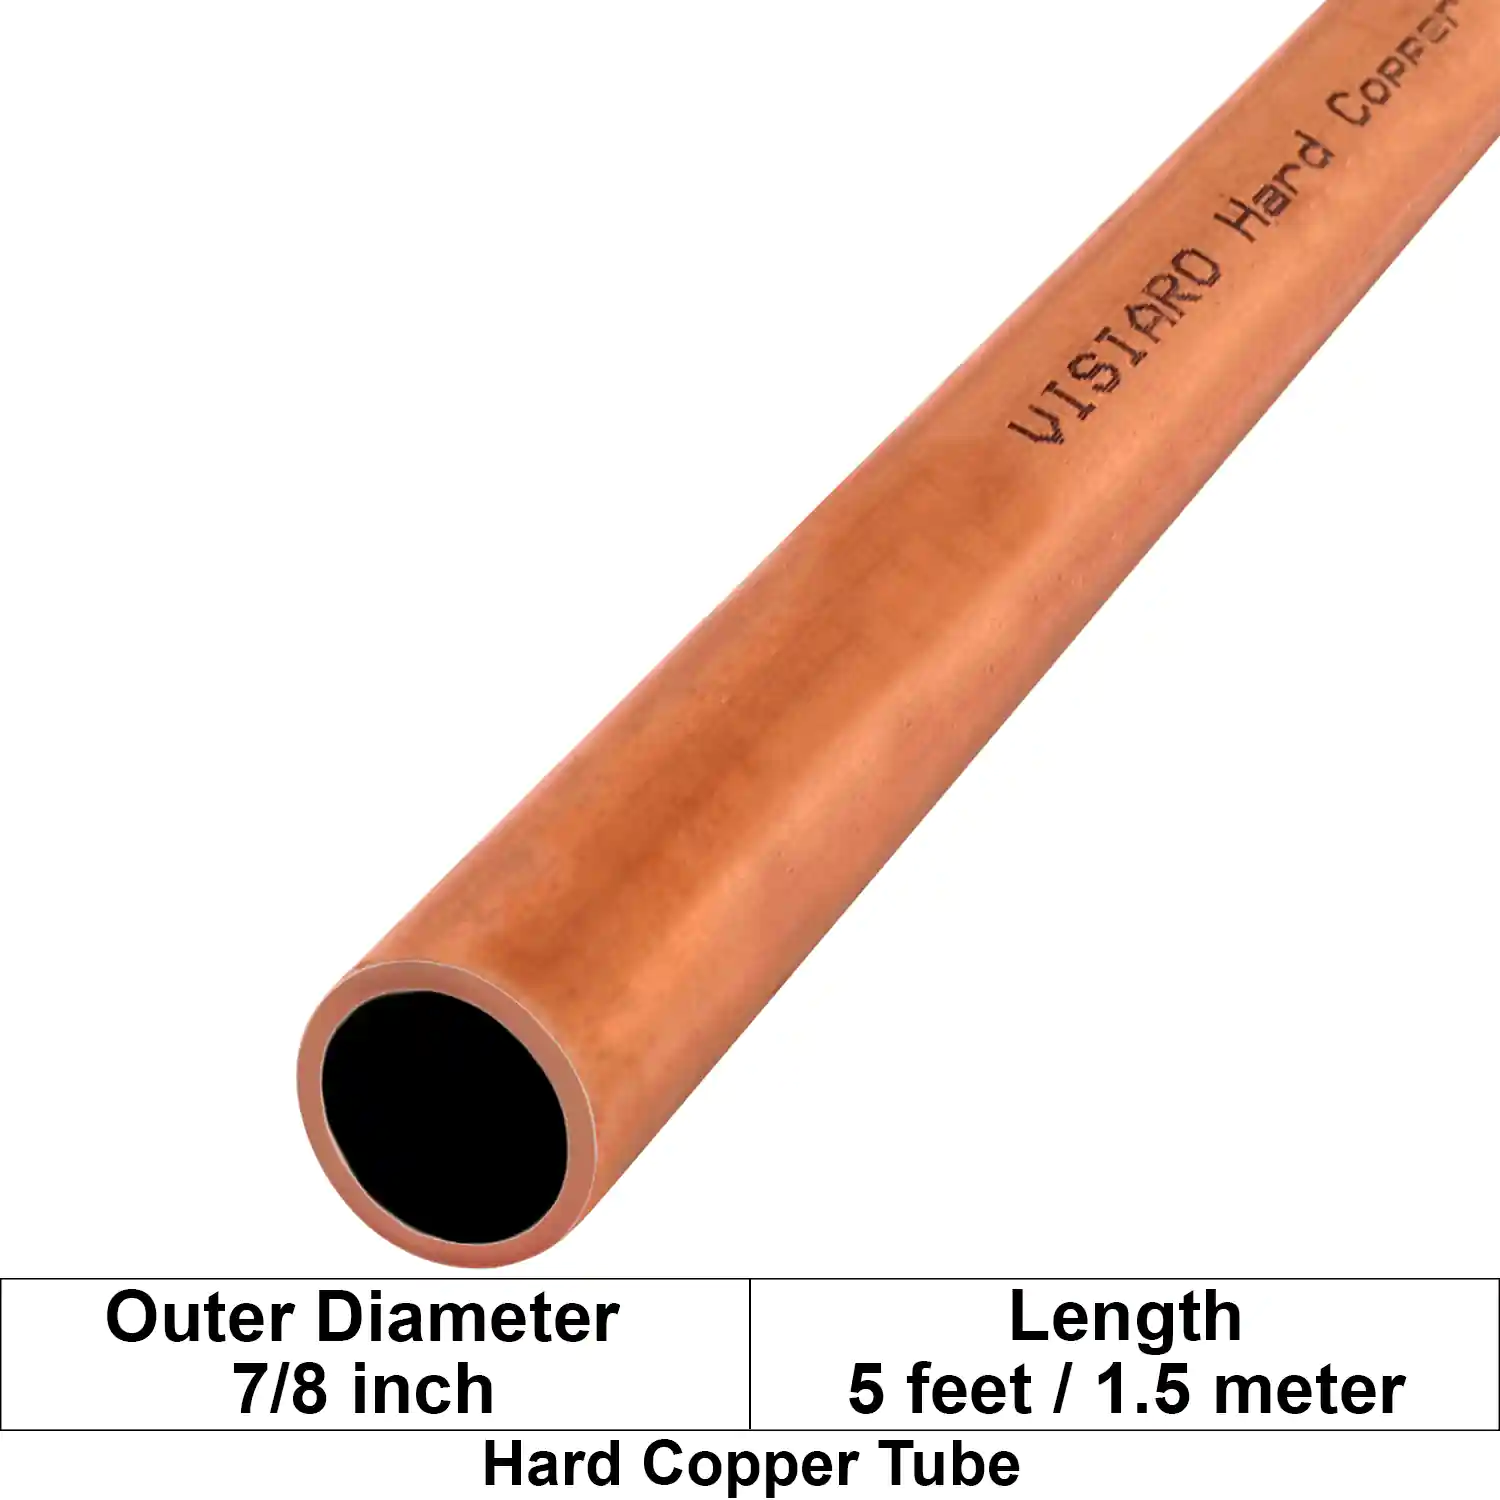 Visiaro Hard Copper Tube 5 feet long Outer Diameter - 7/8 inch